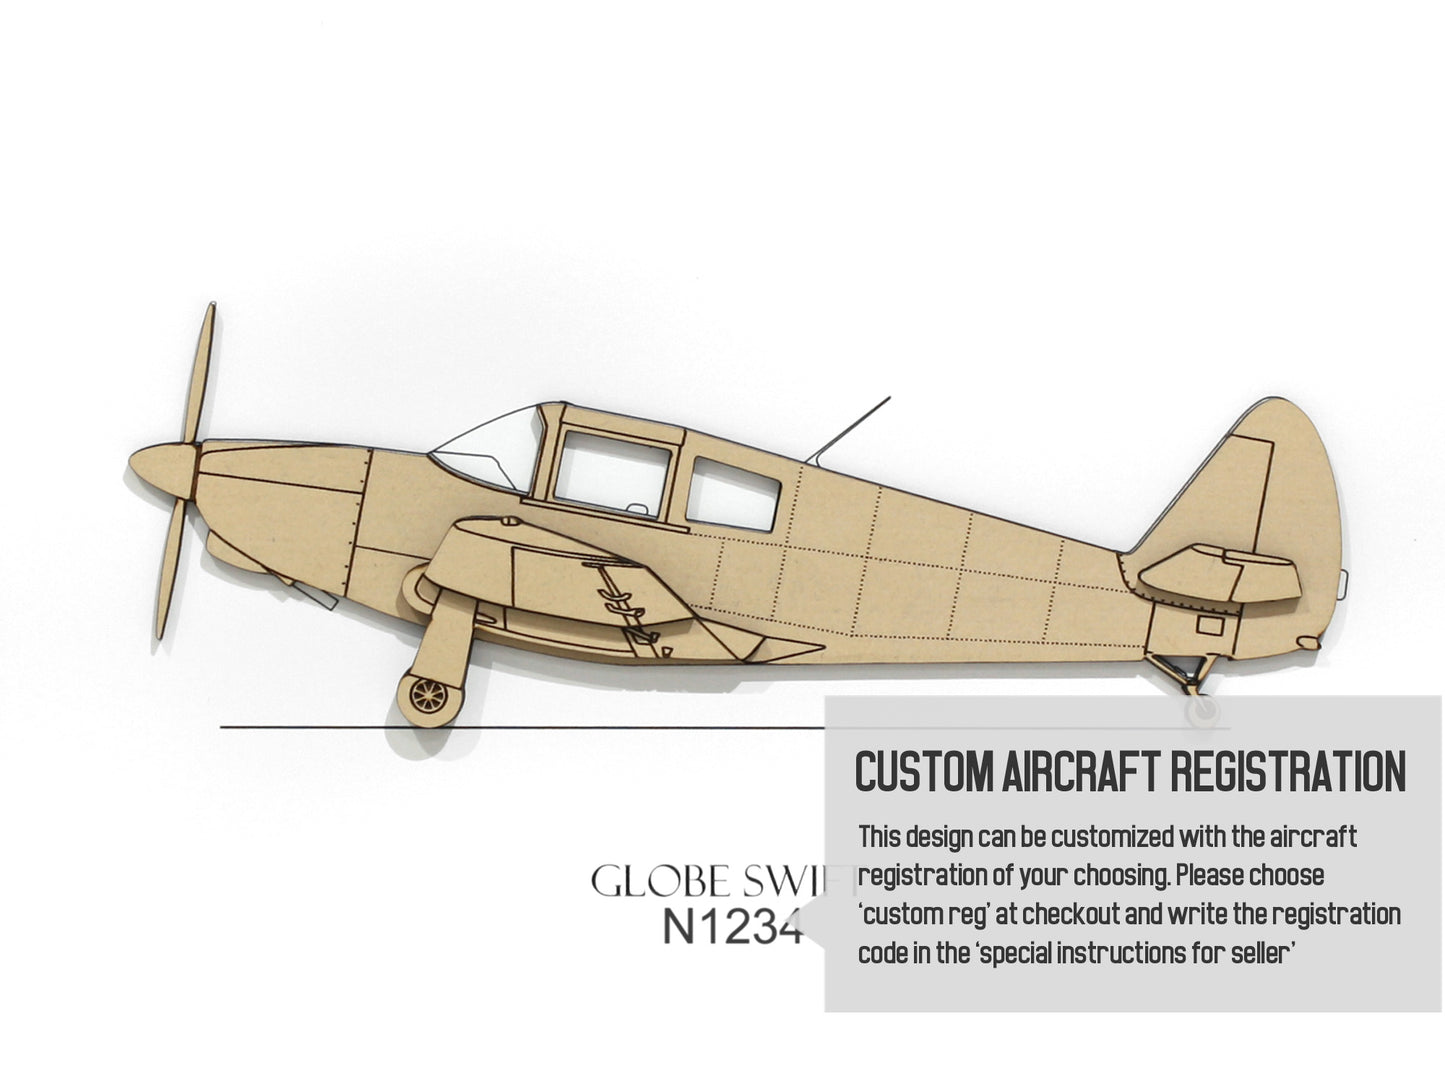 Globe Swift custom aviation art